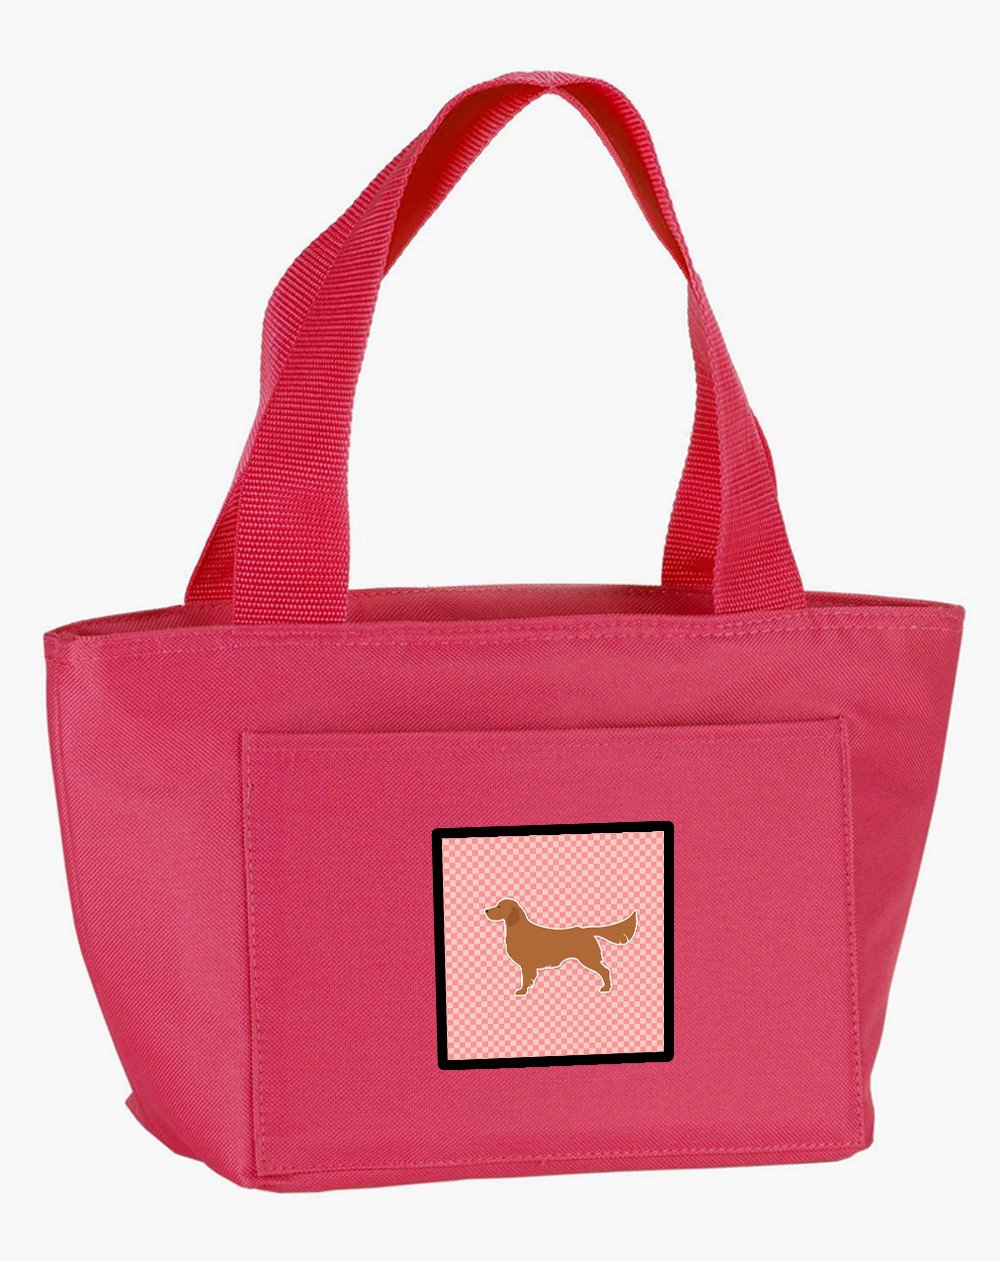 Golden Retriever Checkerboard Pink Lunch Bag BB3604PK-8808 by Caroline's Treasures